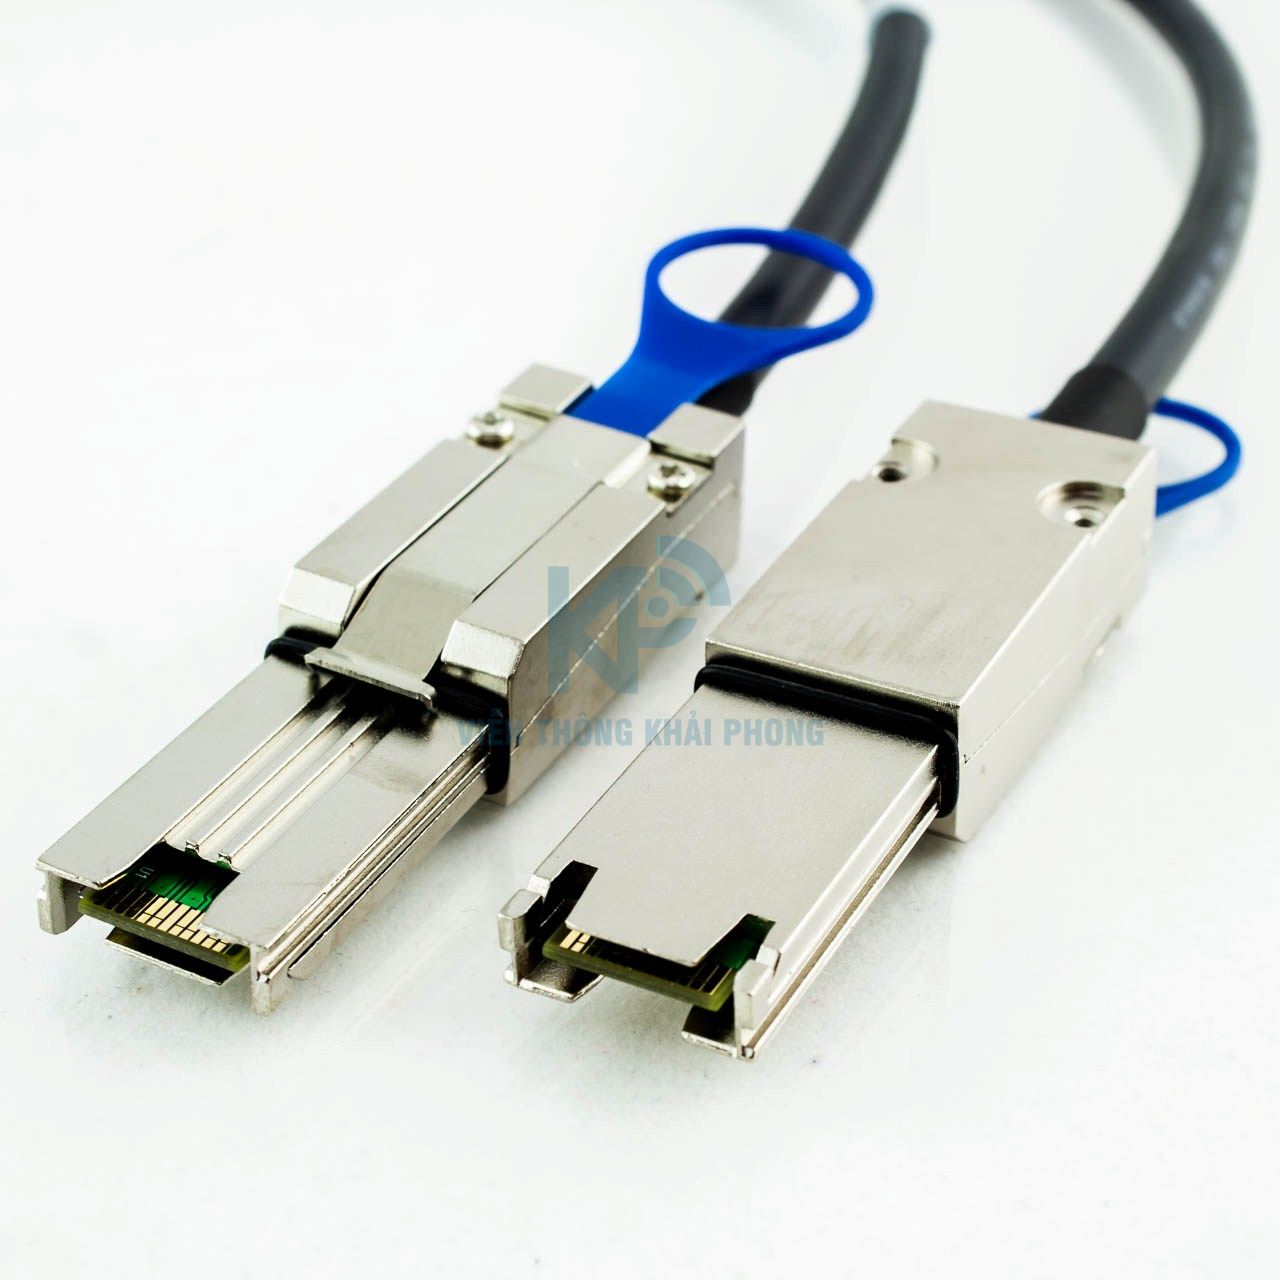 Cáp DAC (Direct Attach Cables) là gì?